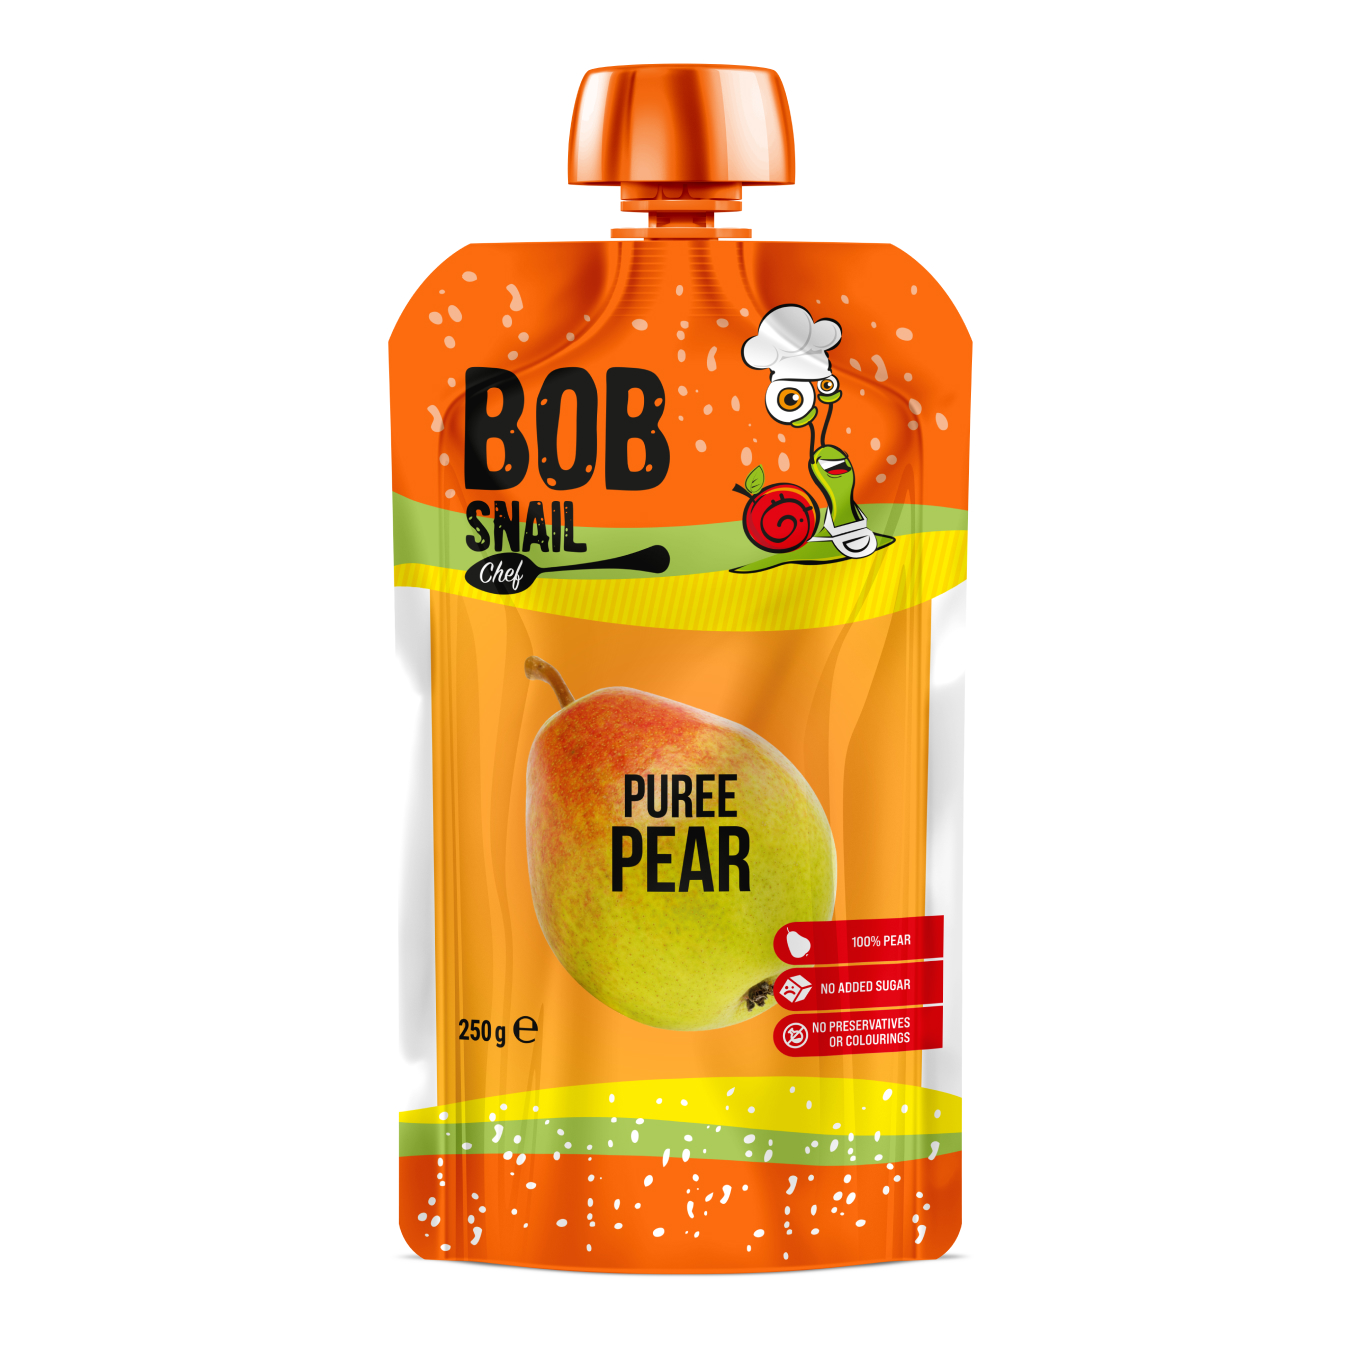 Bob Snail fruit puree Pear pasteurized 250g